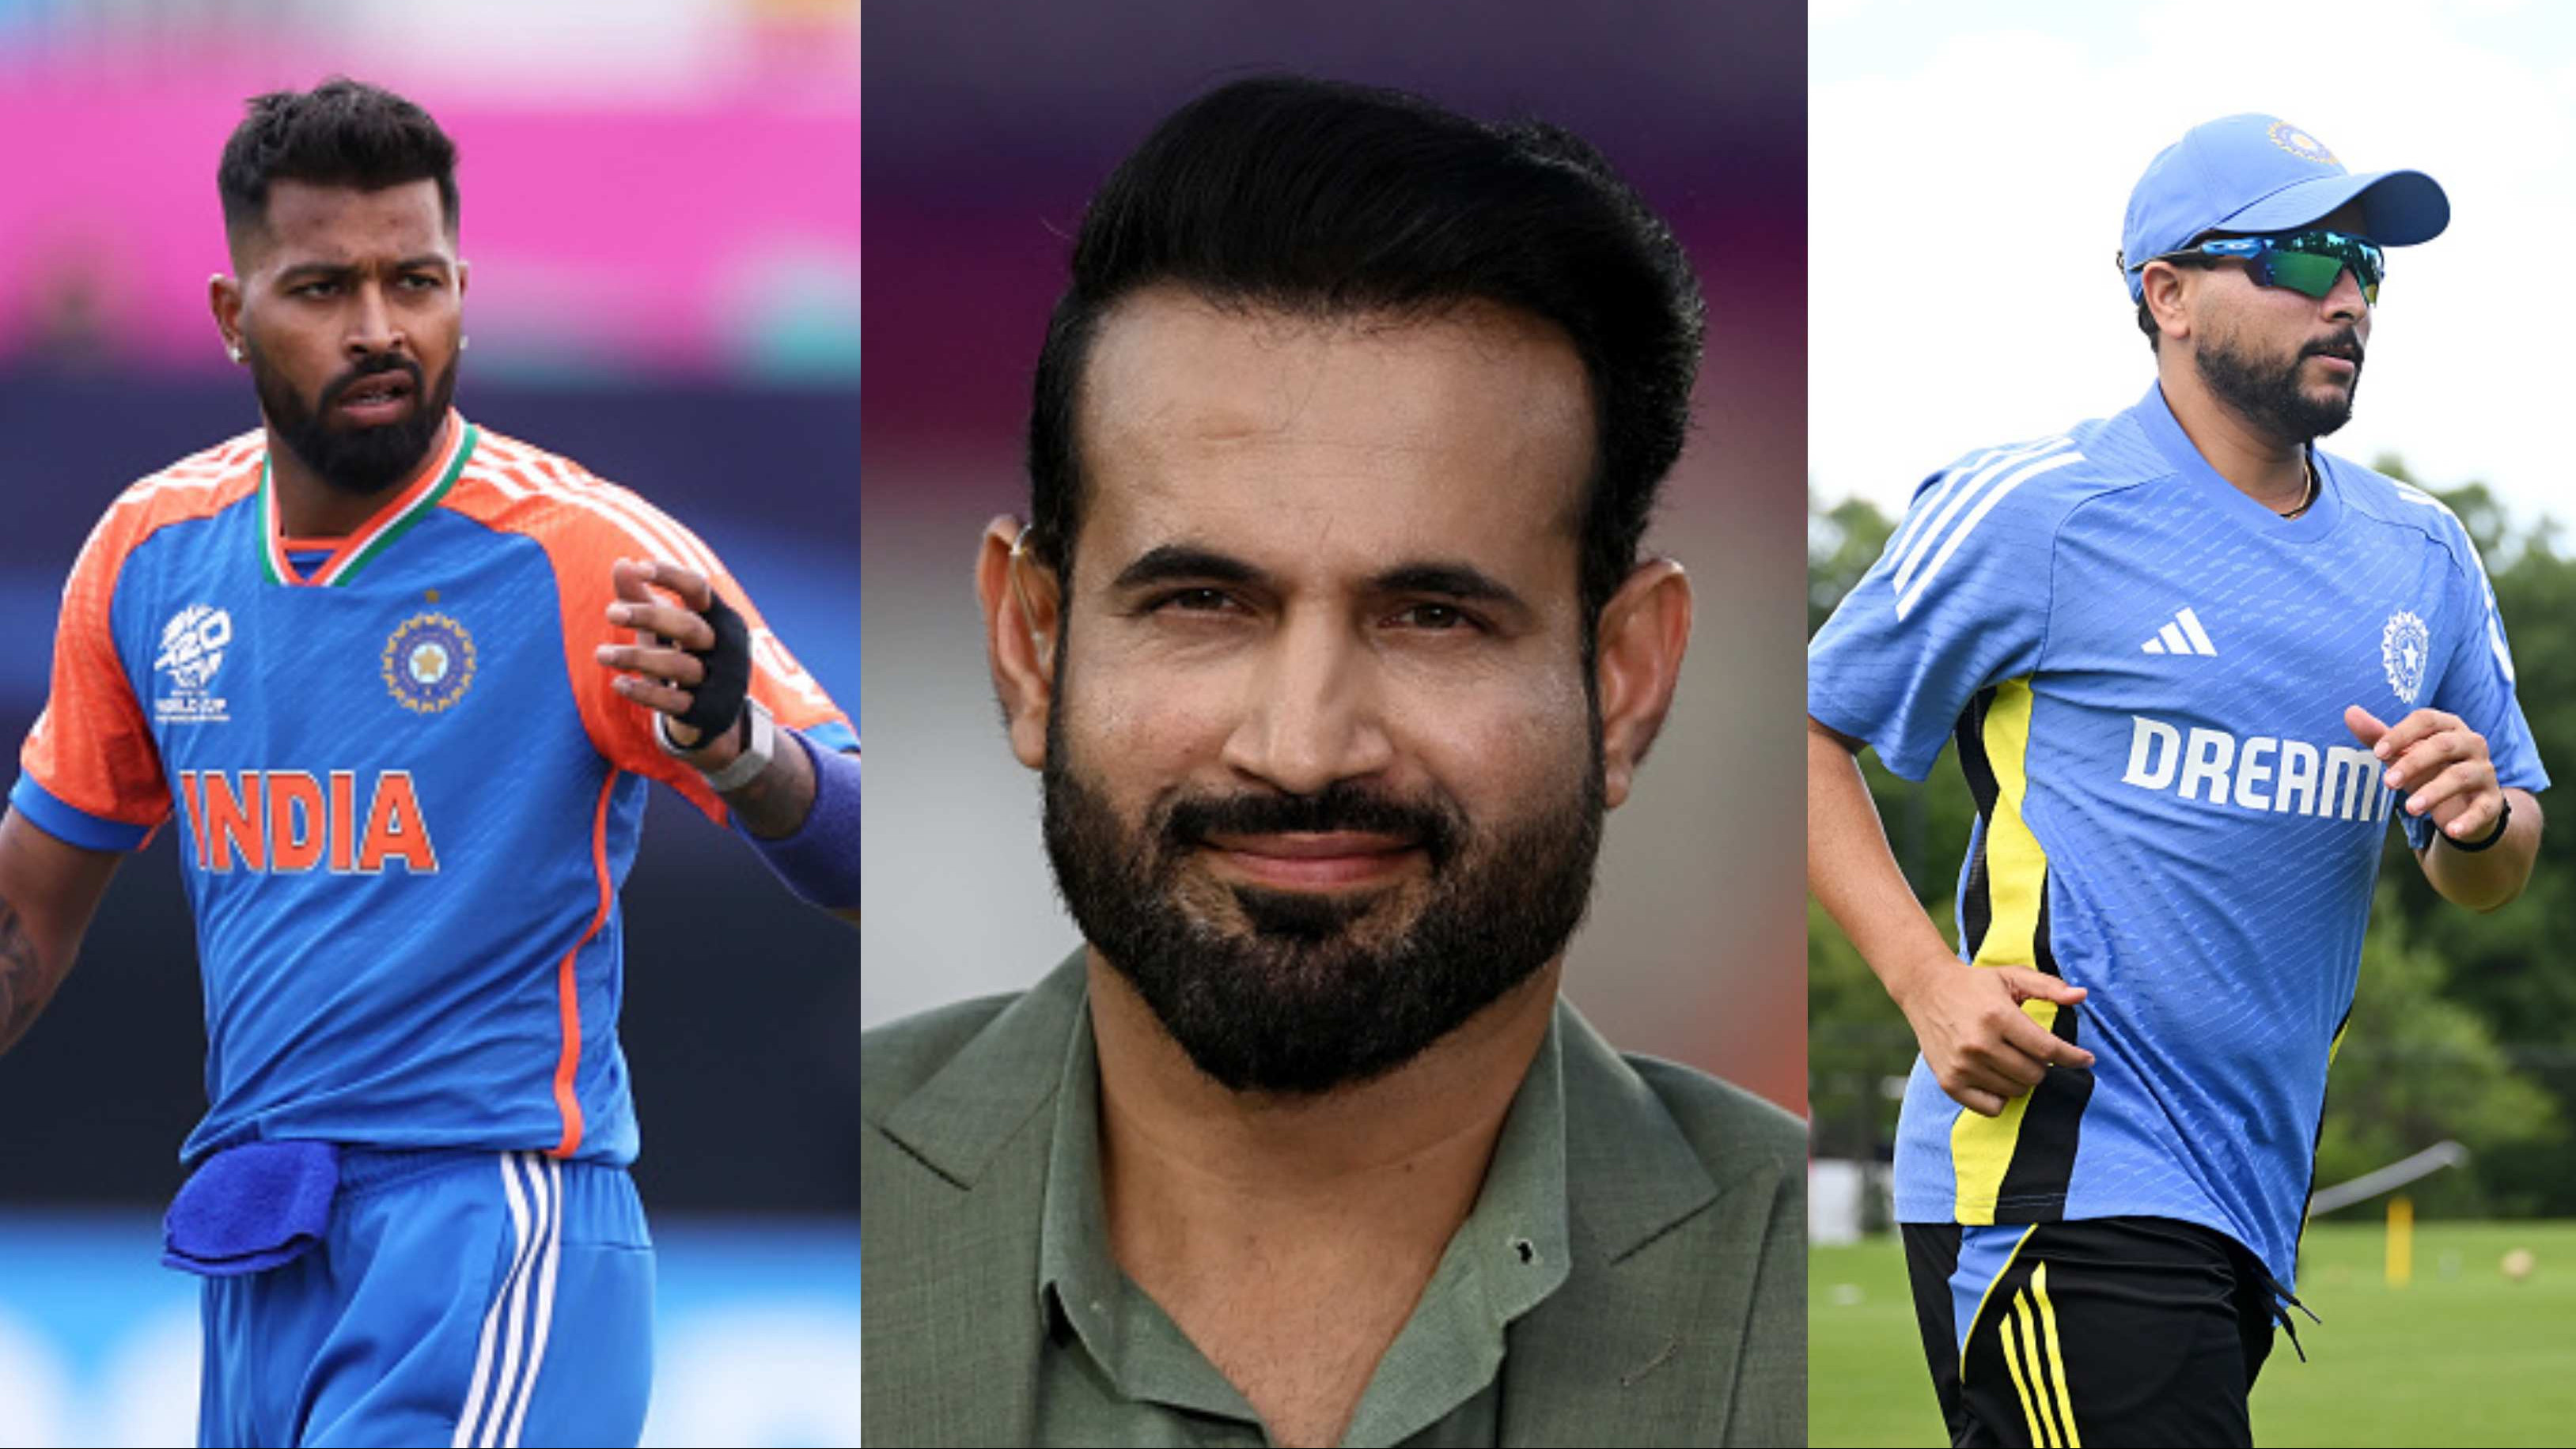 Hardik Pandya’s bowling form will allow India to pick Kuldeep Yadav in playing XI: Irfan Pathan